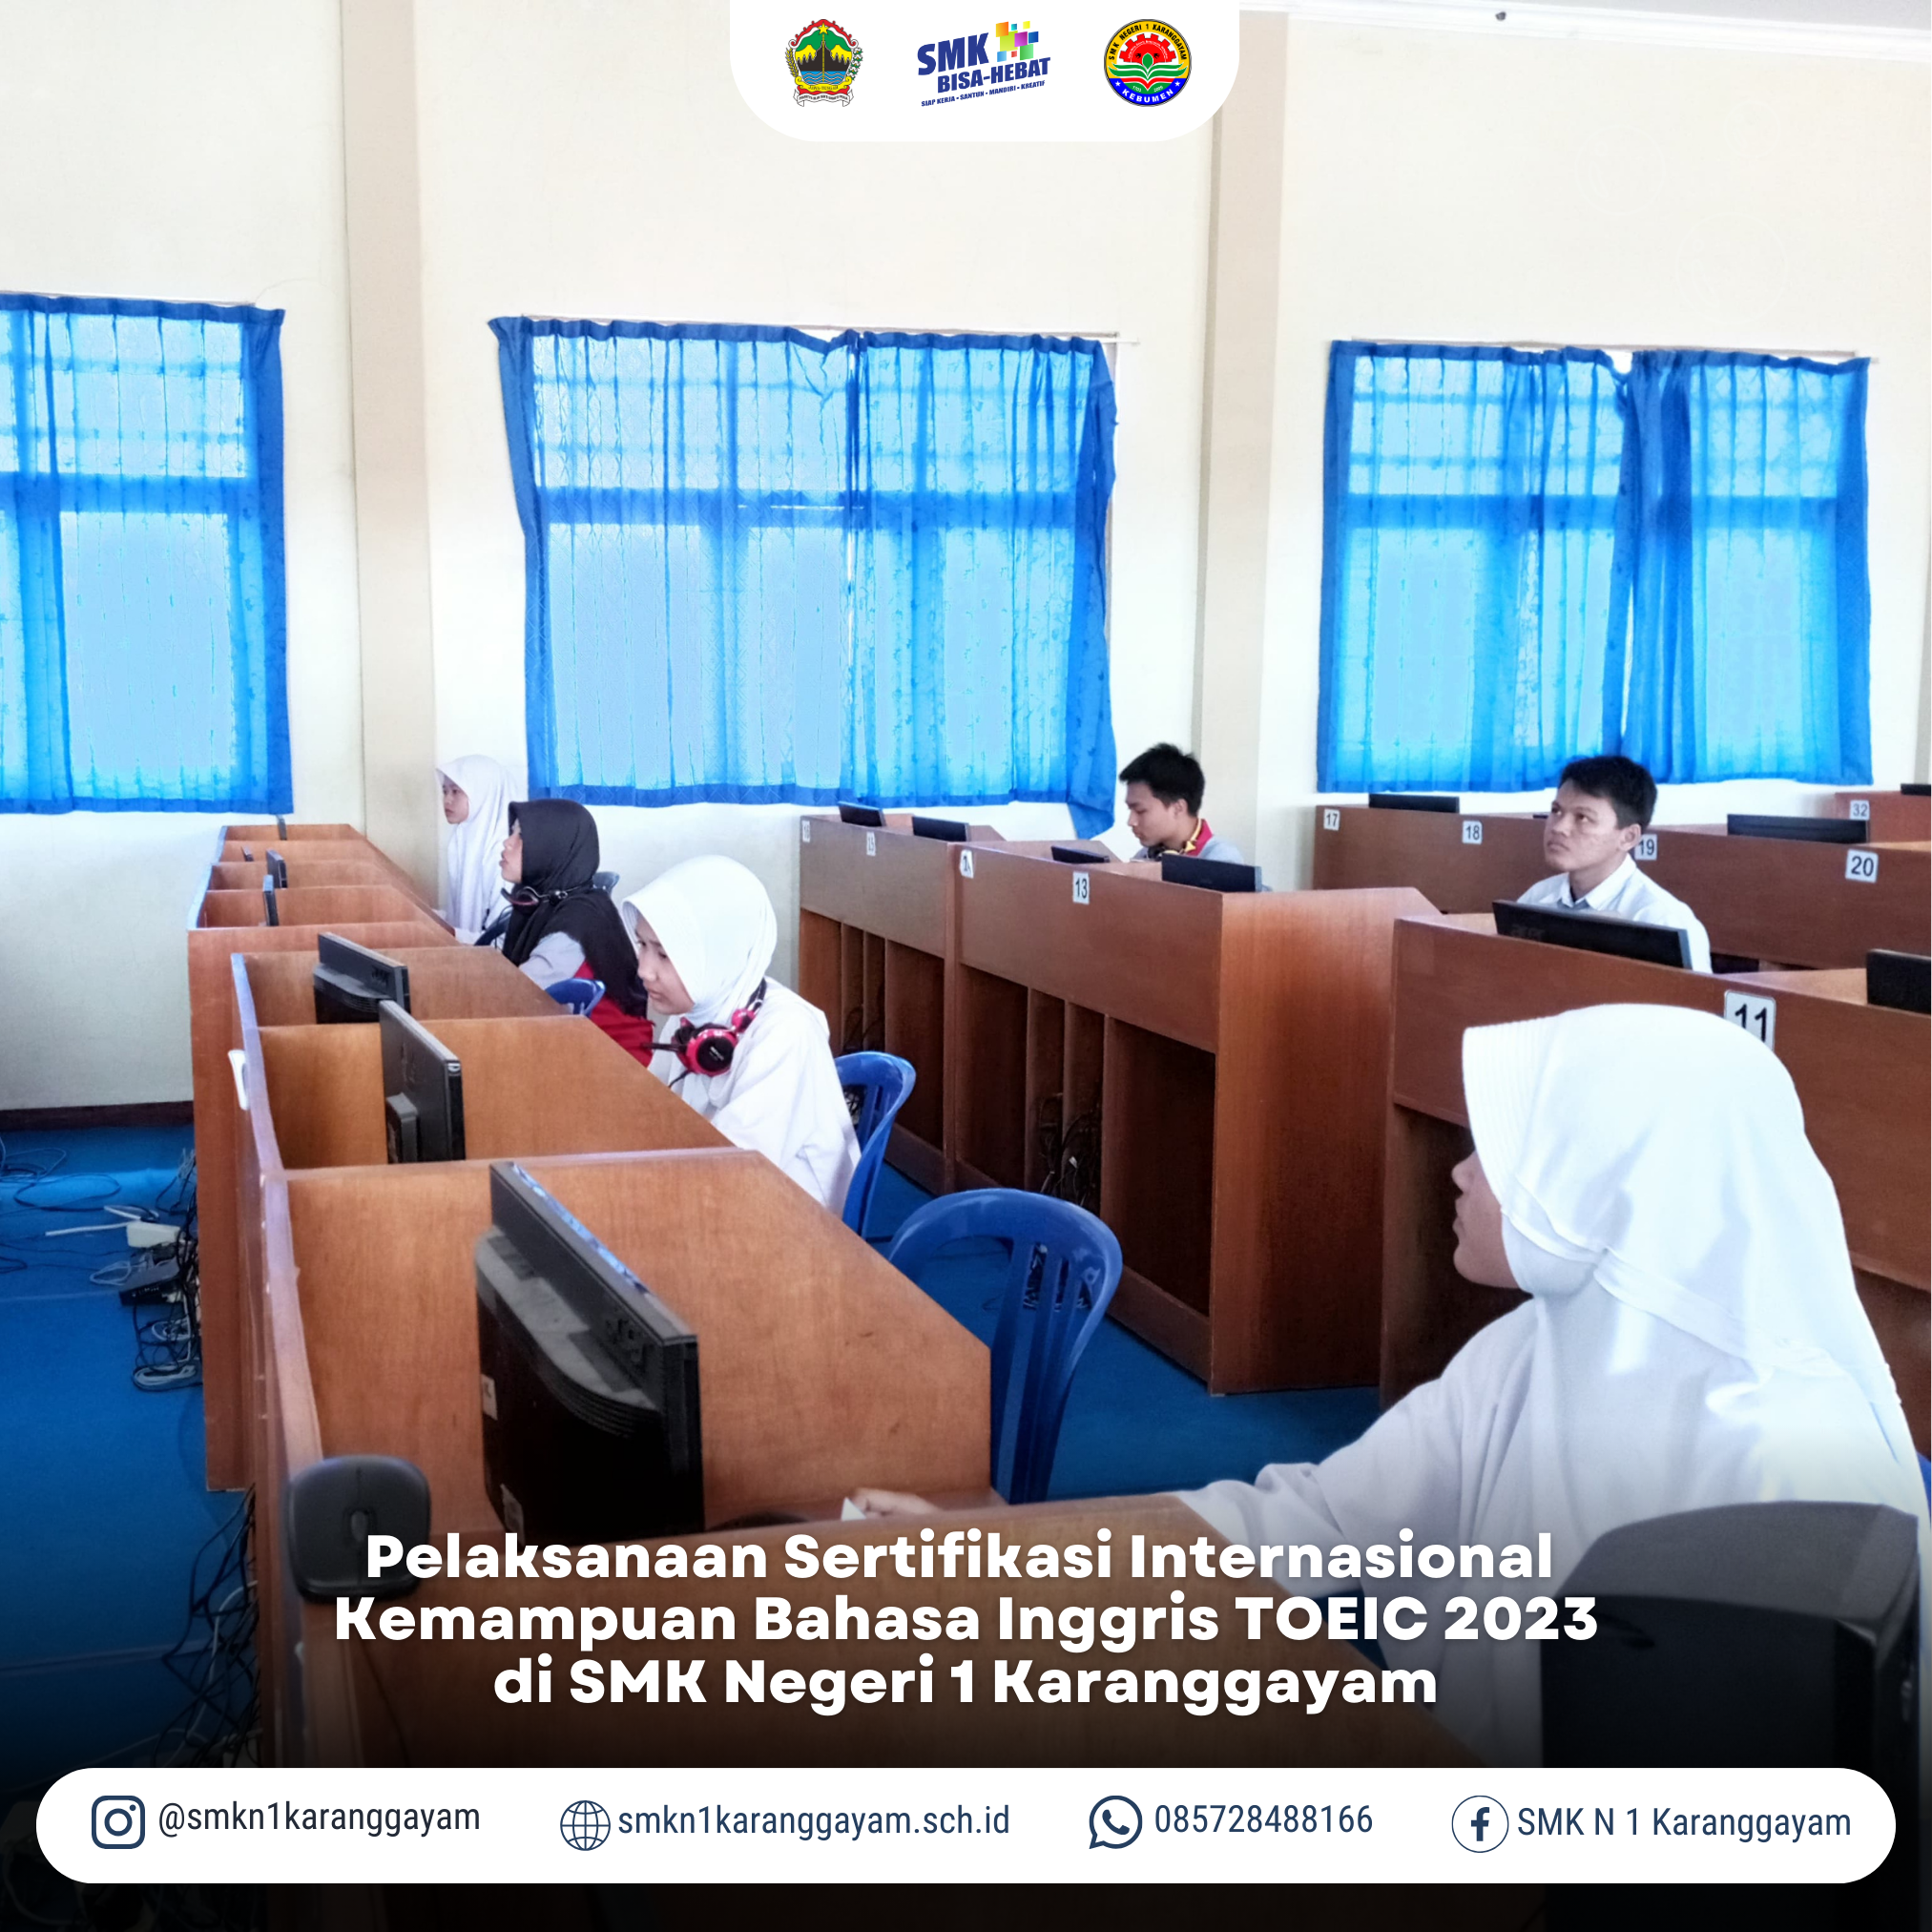 Pelaksanaan Sertifikasi Internasional Kemampuan Bahasa Inggris TOEIC 2023 di SMK Negeri 1 Karanggayam